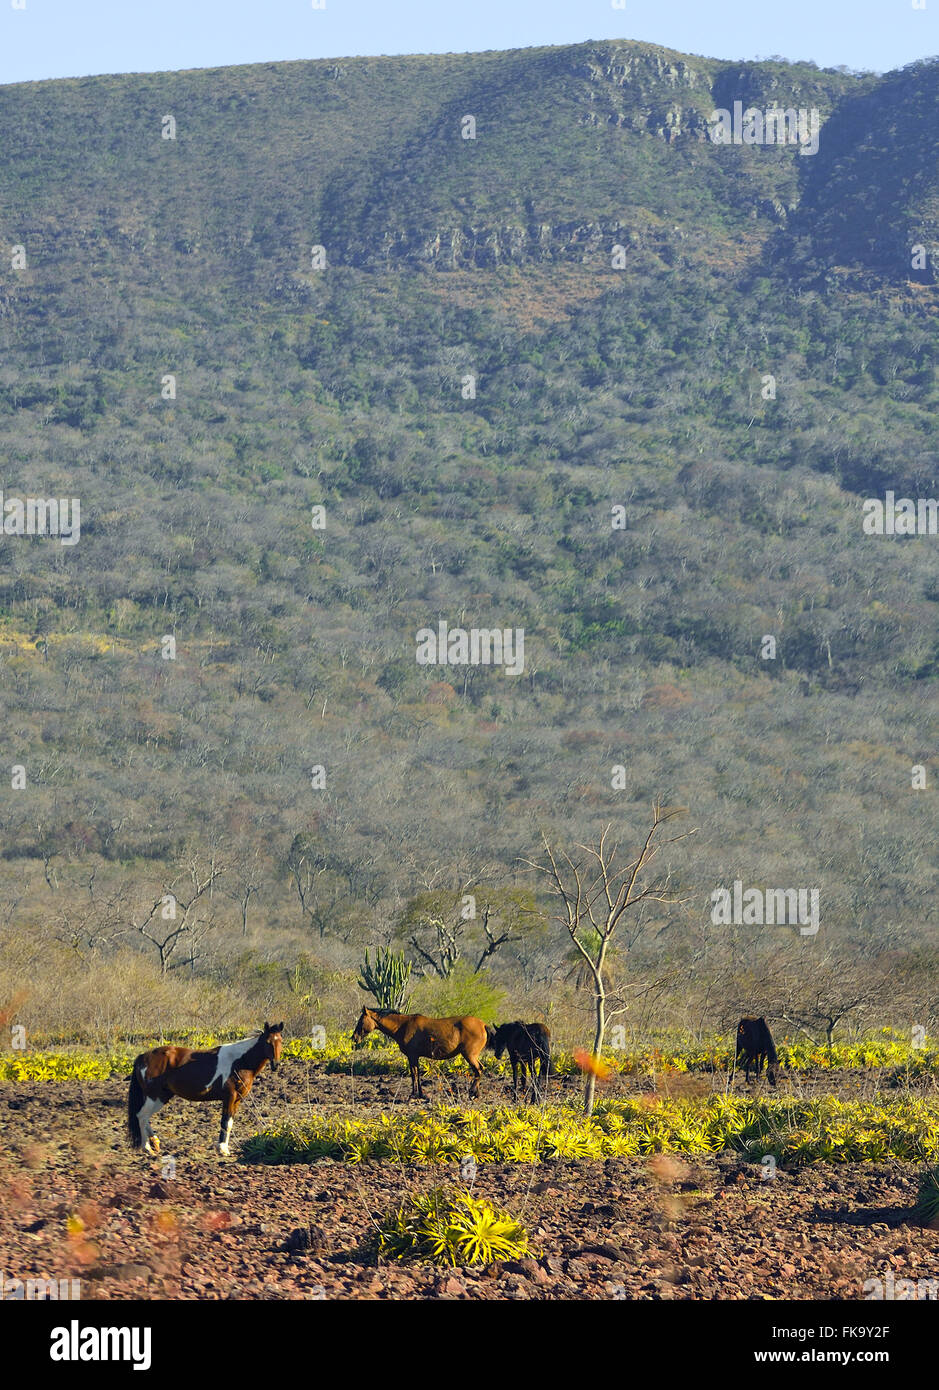 Horses grazing in bromeliad fields - Urucum Massif in the background Stock Photo